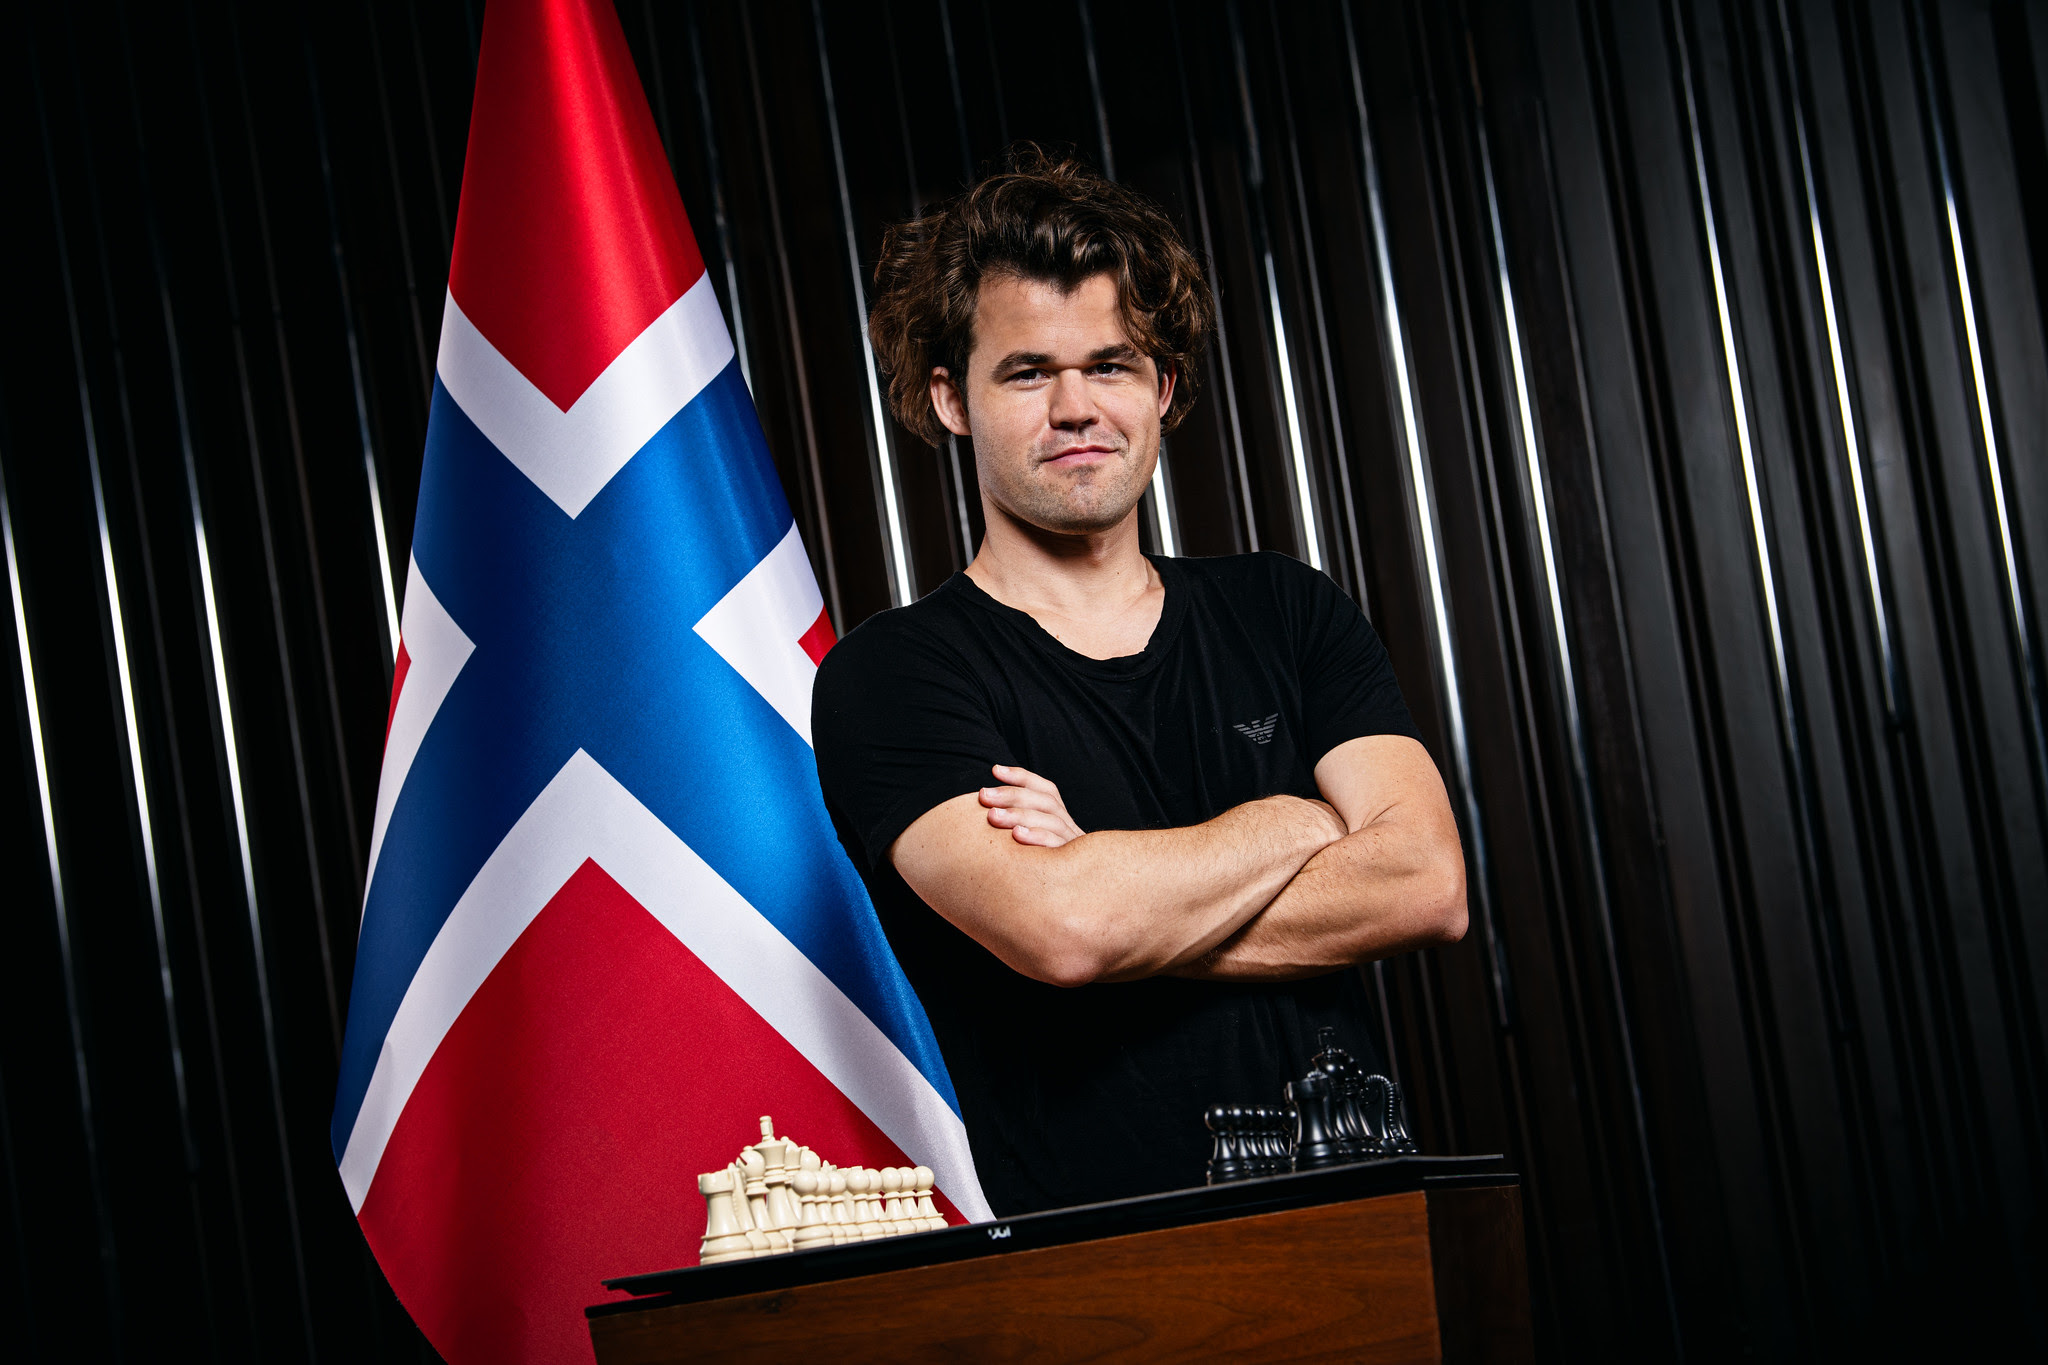 Magnus Carlsen on his chess career